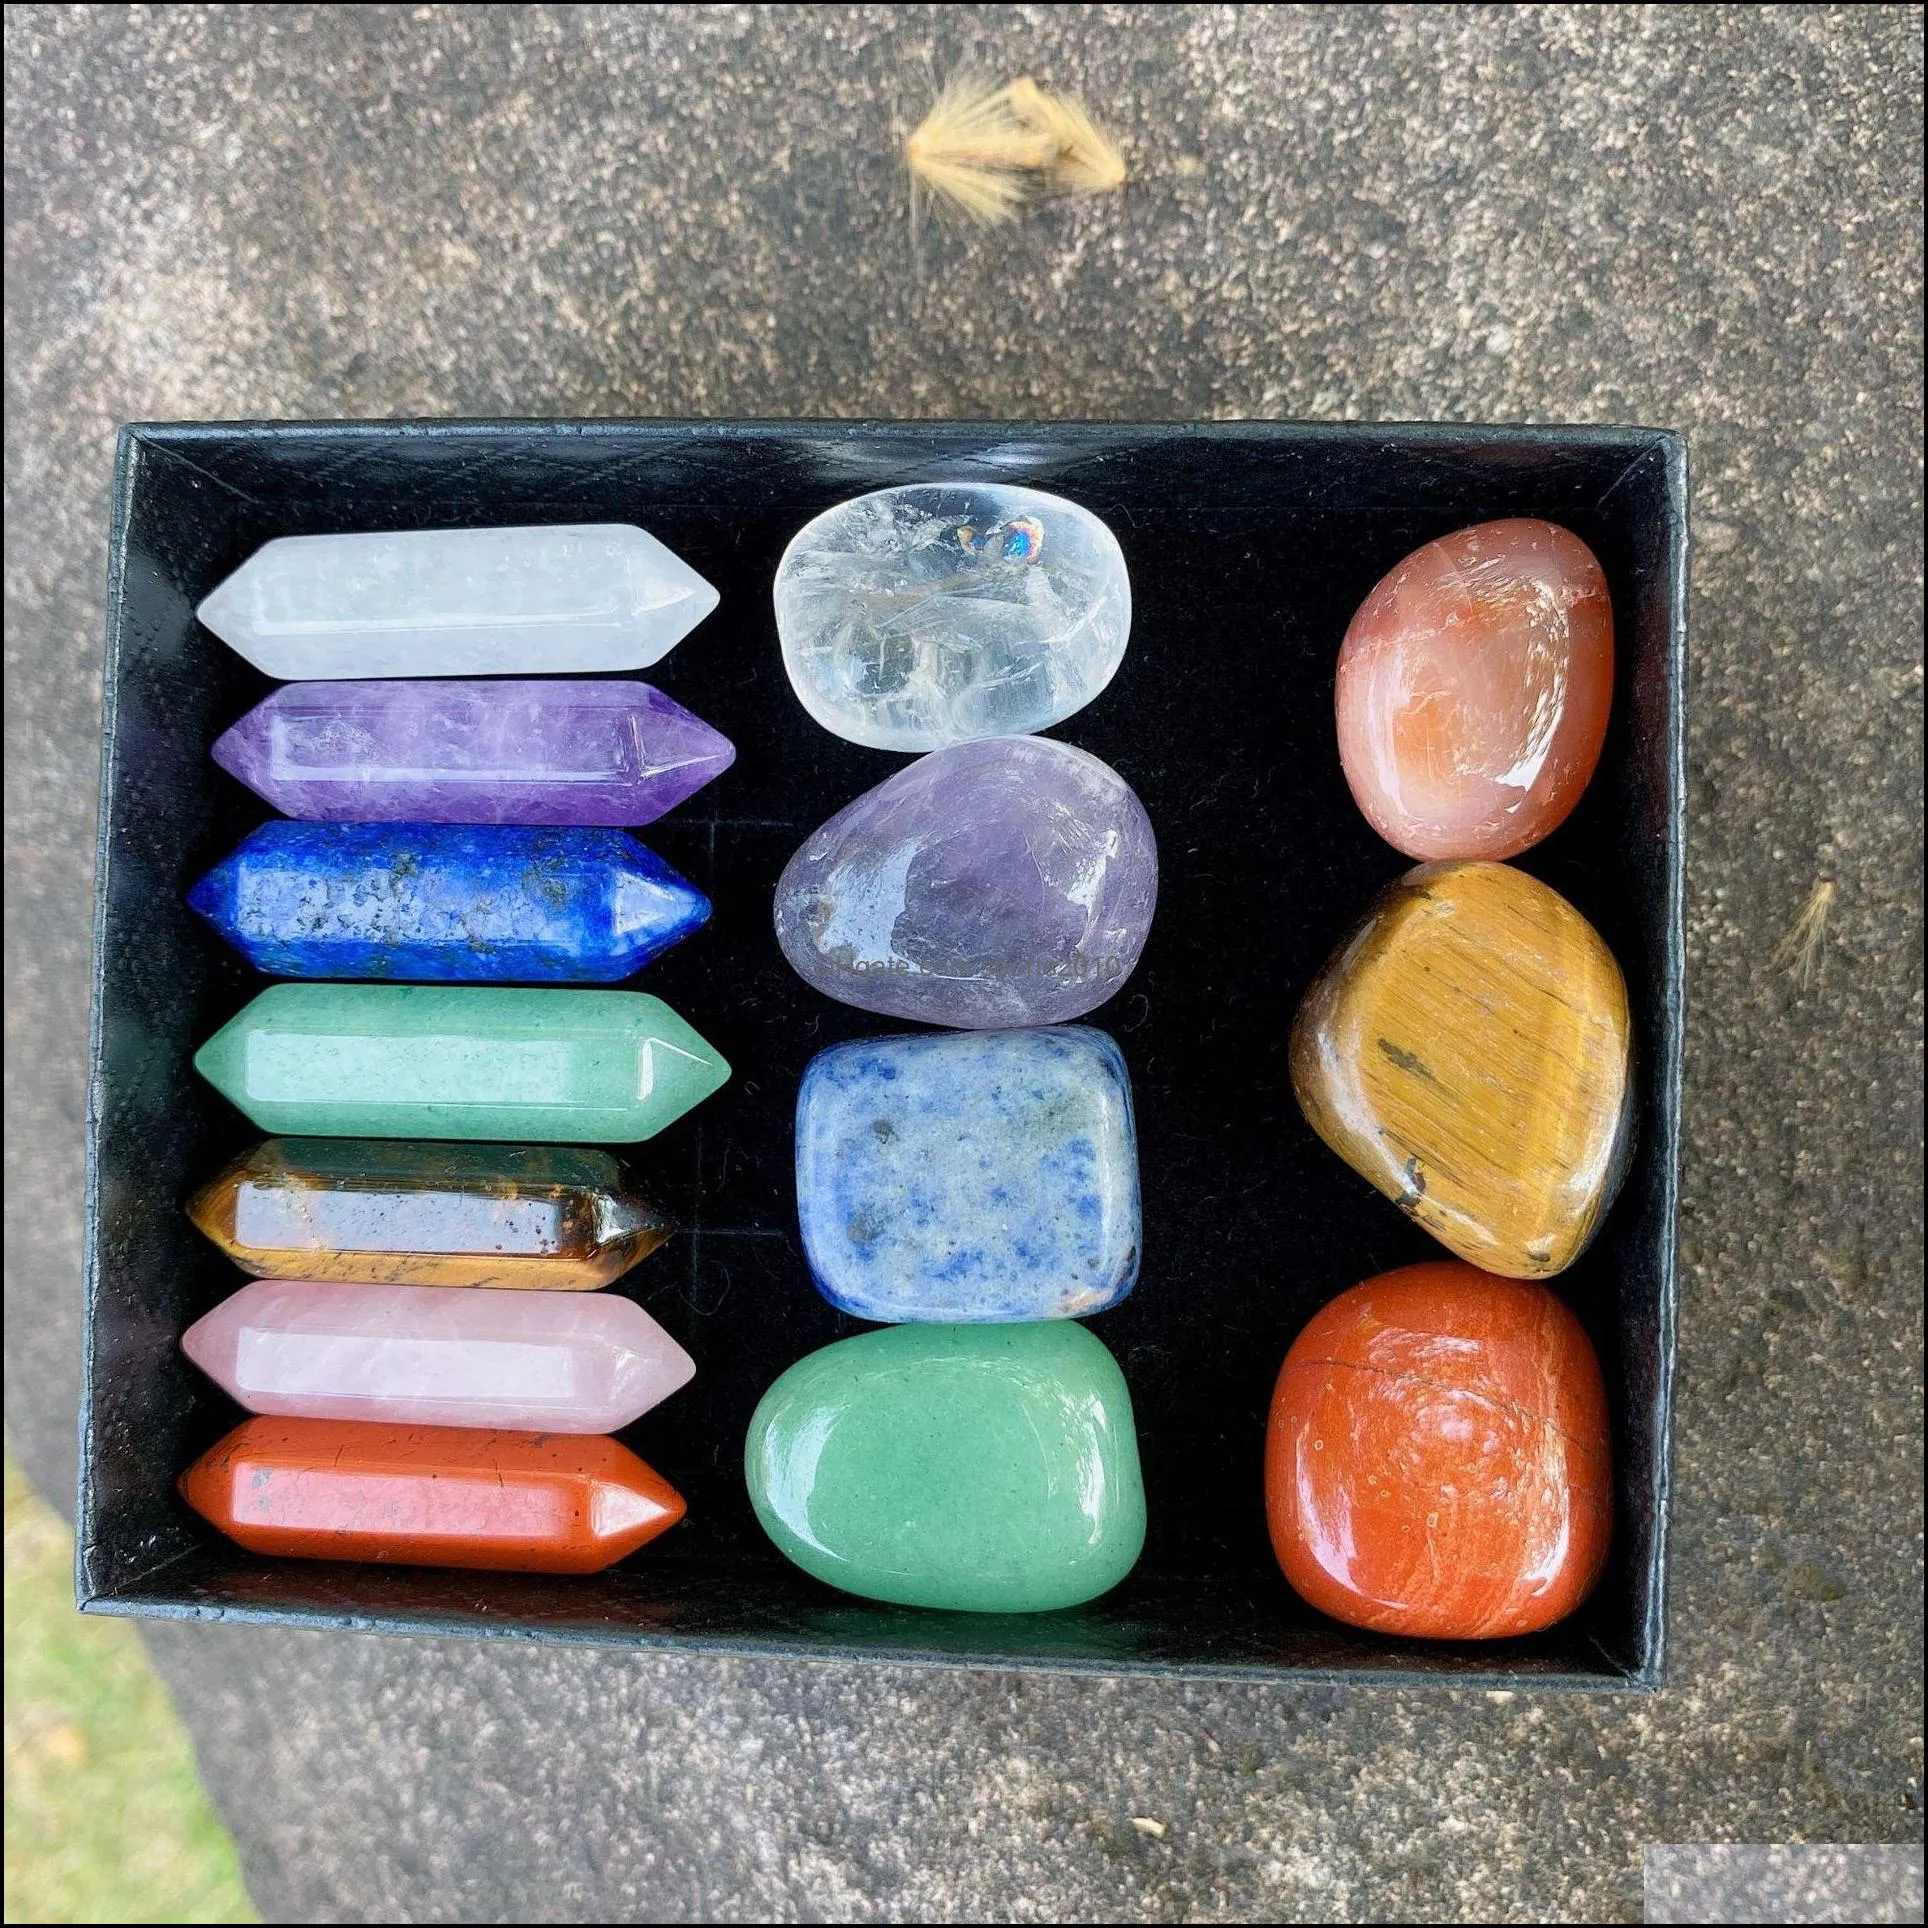 7 chakra set reiki natural stone crystal stones ornaments hexagon prism quartz yoga energy bead chakra healing art craft de sports2010